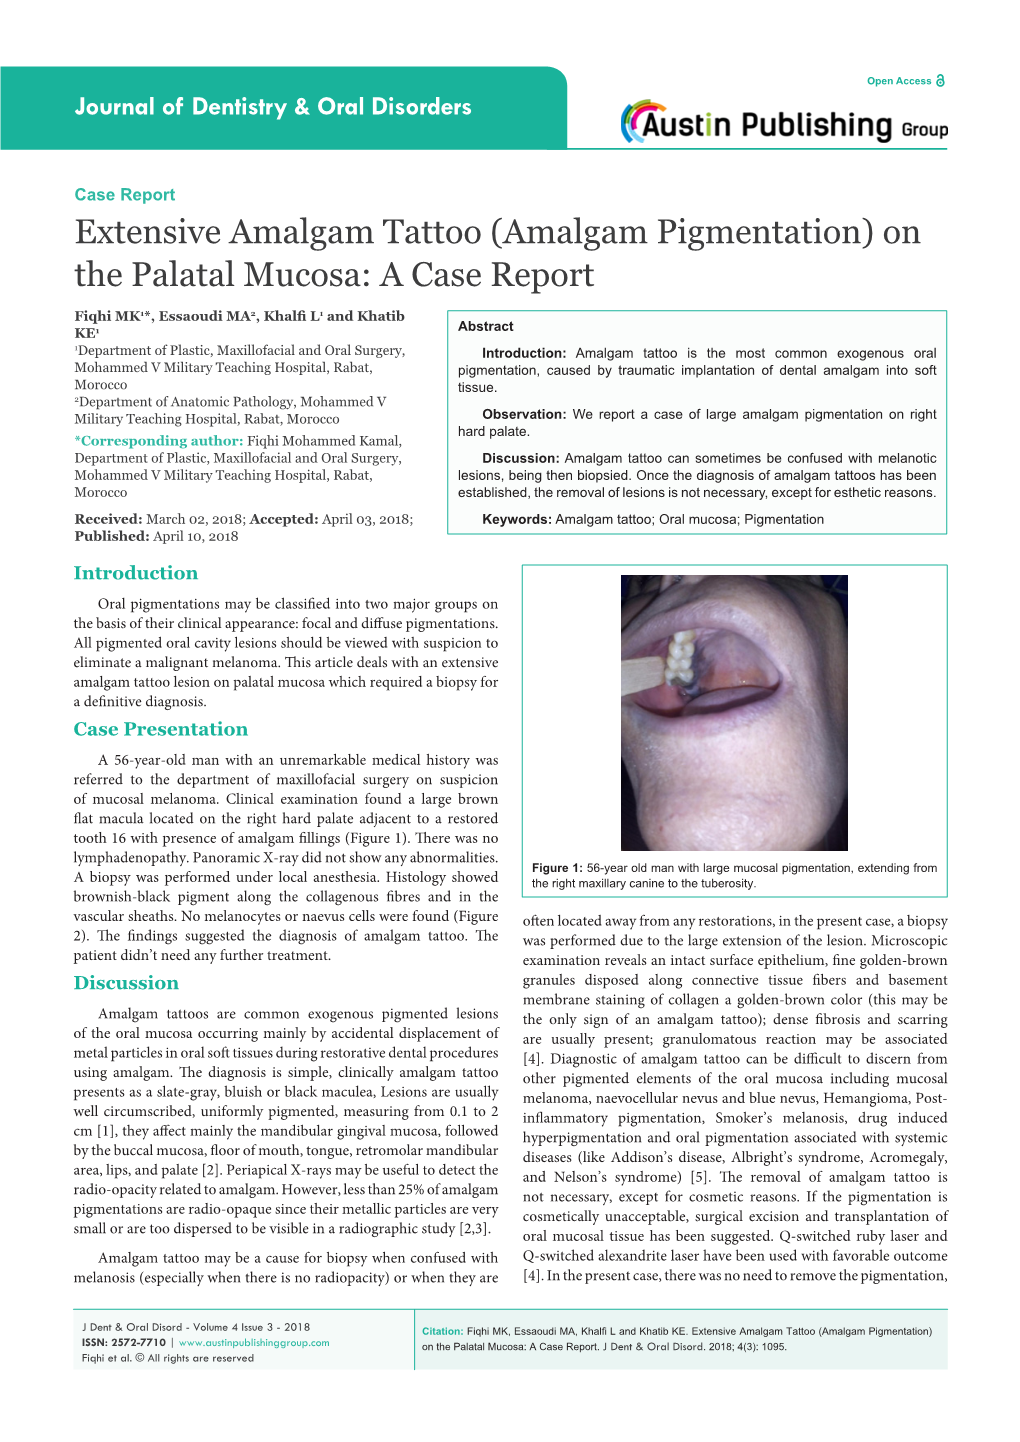 Amalgam Pigmentation) on the Palatal Mucosa: a Case Report